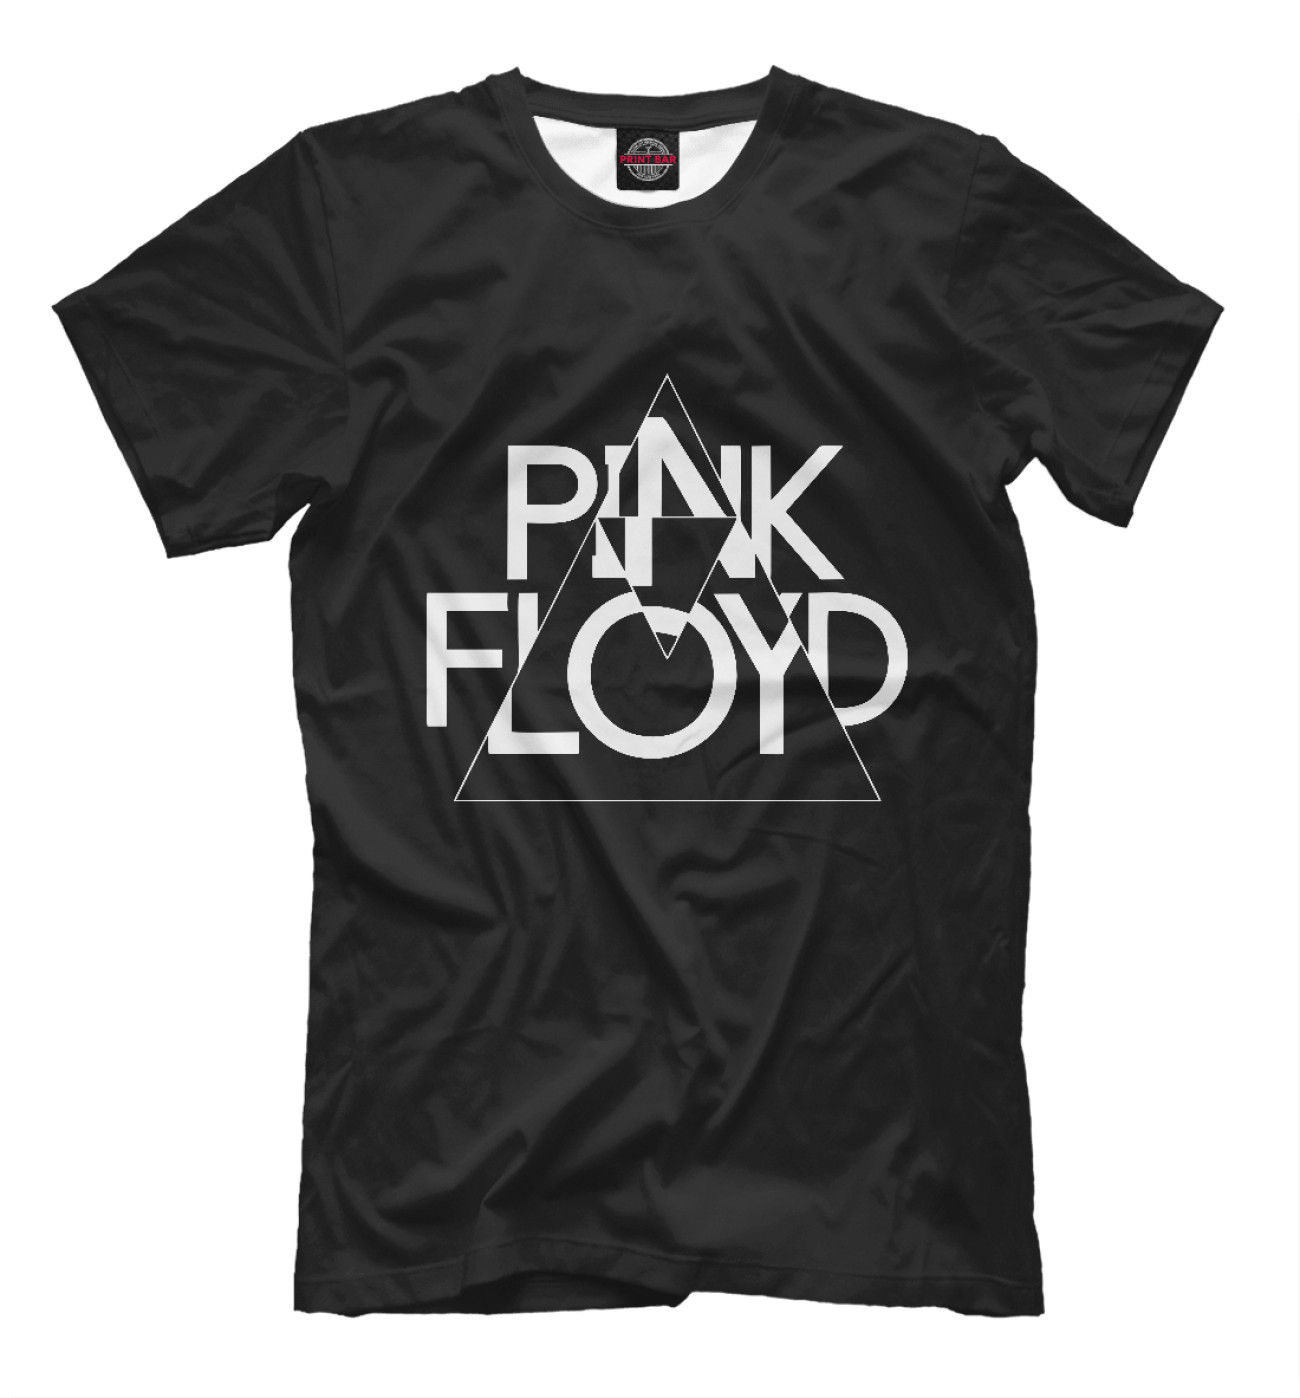 Мужская Футболка Pink Floyd белый логотип, артикул: PFL-249068-fut-2